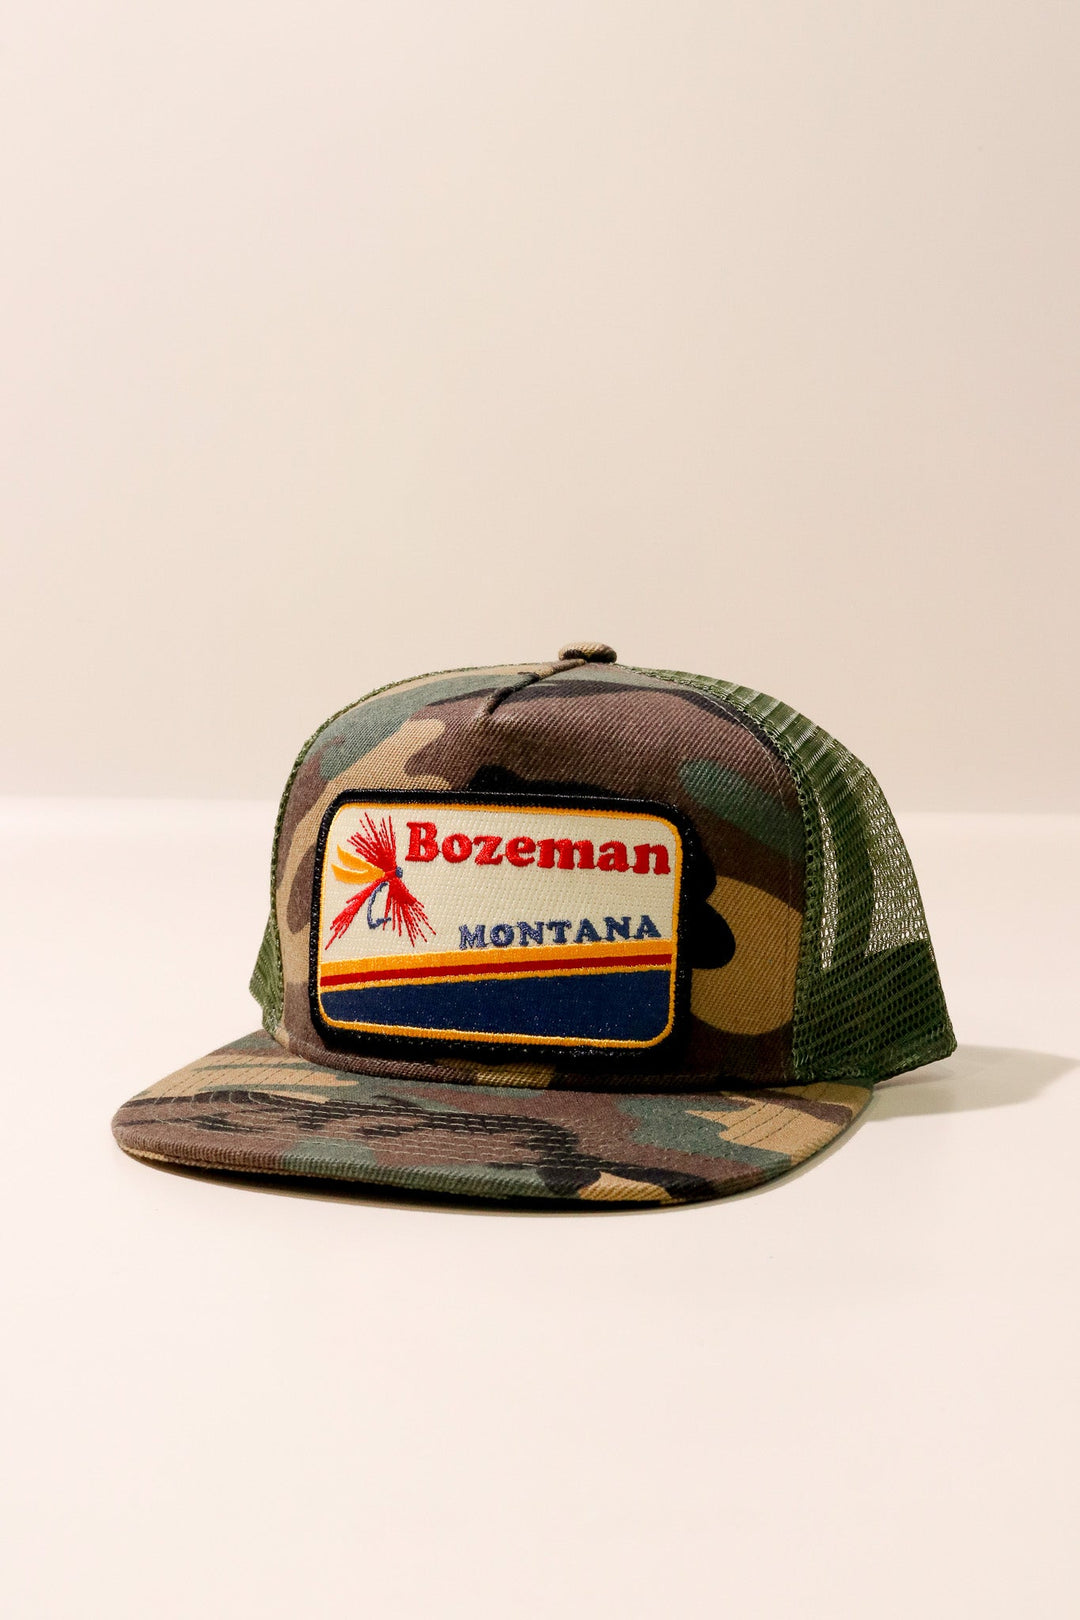 Camo Bozeman Pocket Patch Hat - Heyday